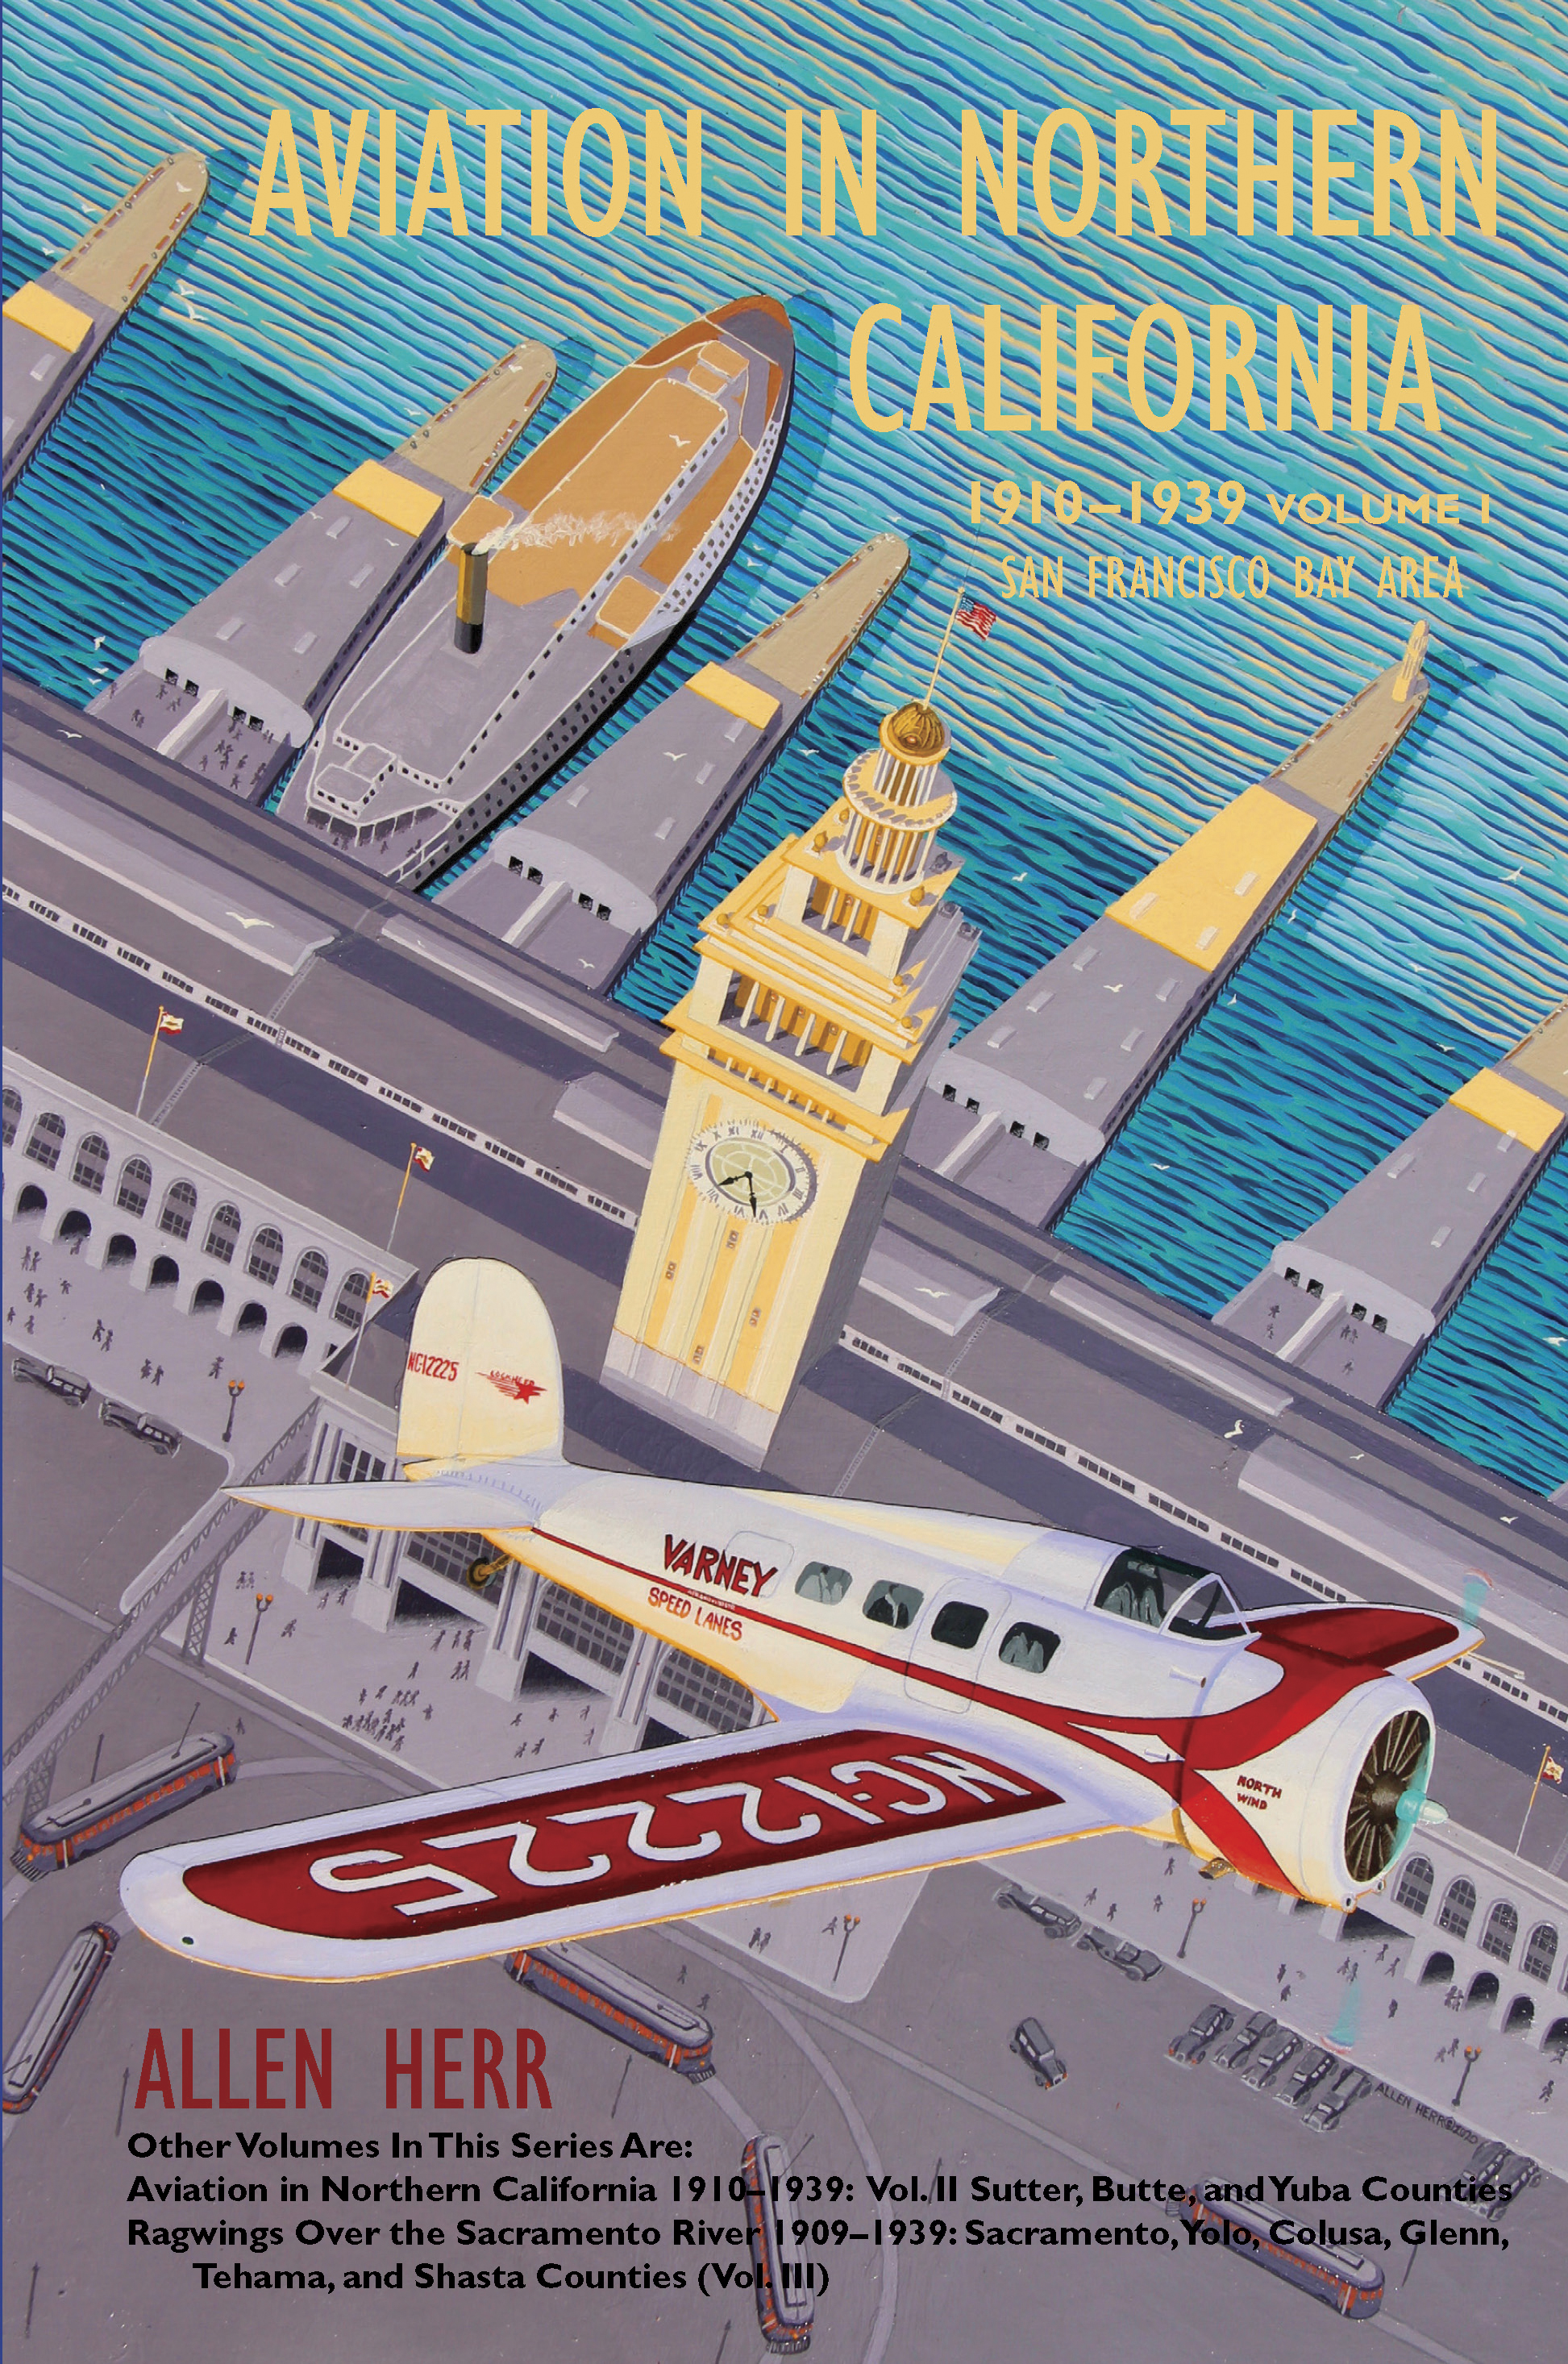 Aviation in Northern California 1910-1939: Vol 1 San Francisco Bay Area